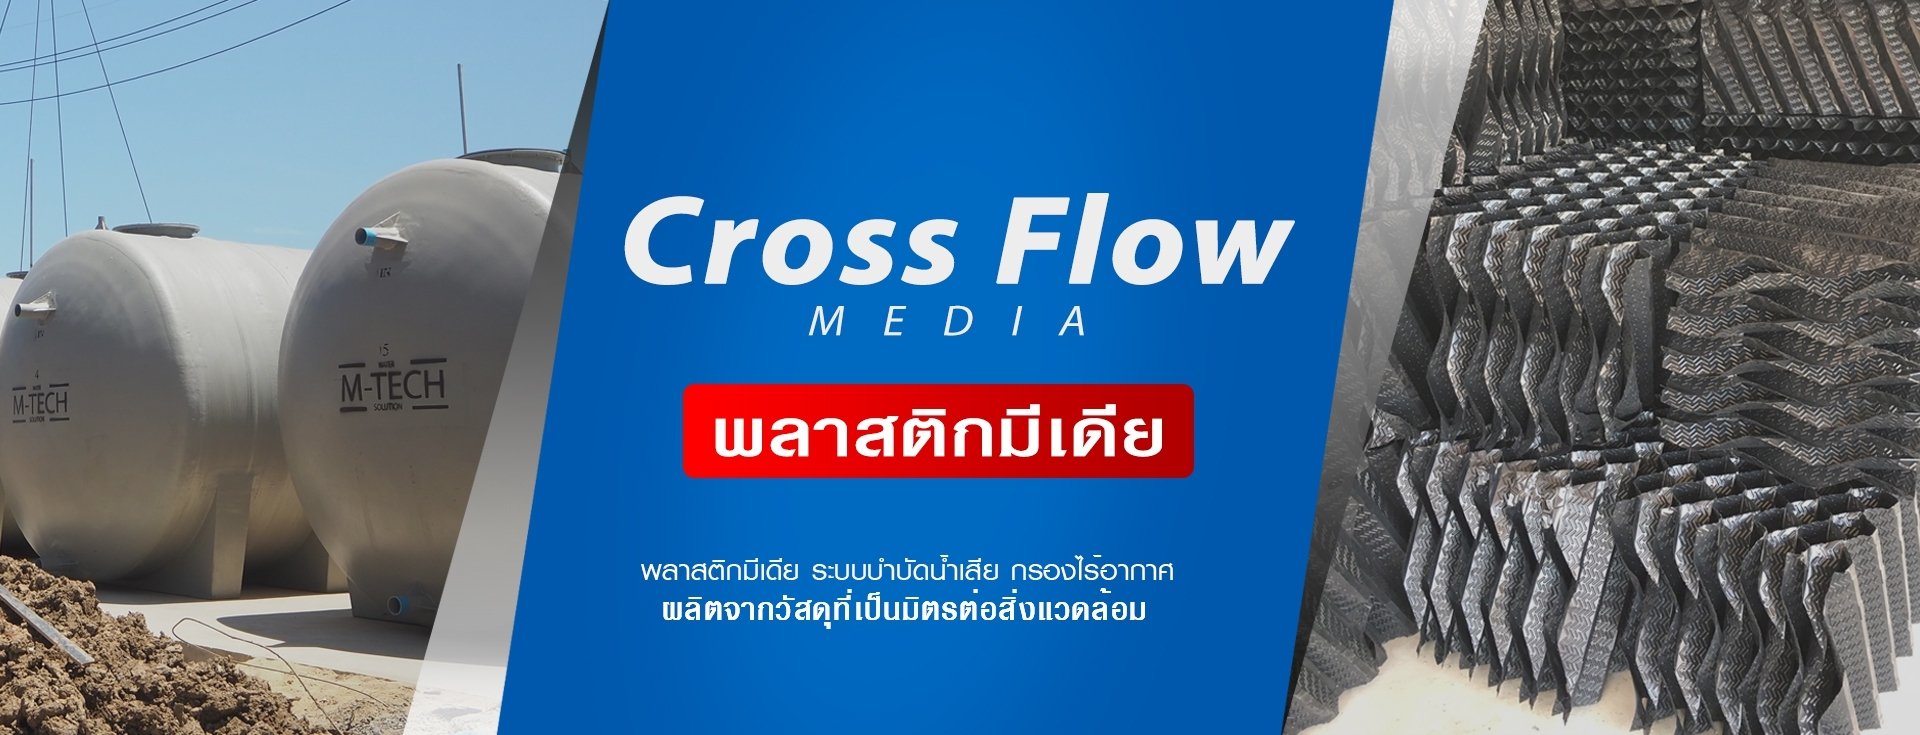 Cross Flow Media ระบบบำบัดน้ำเสีย ราคาถูก